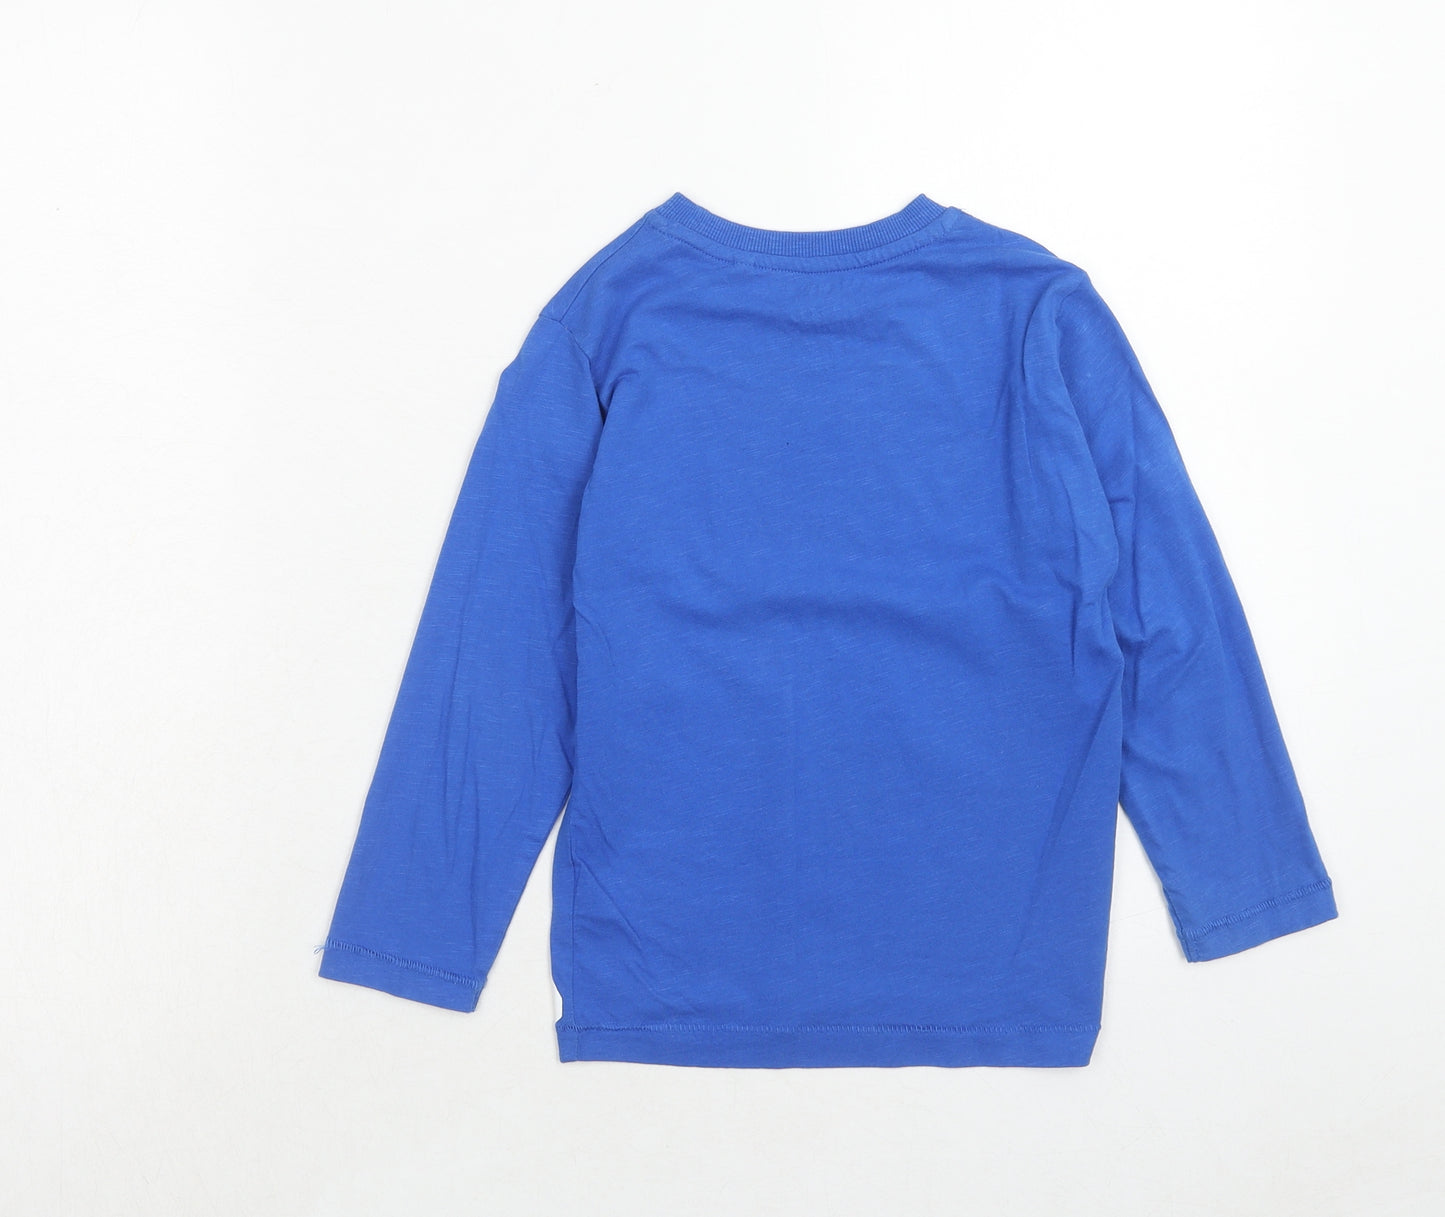 Debenhams Boys Blue Cotton Basic Casual Size 5-6 Years Round Neck Pullover